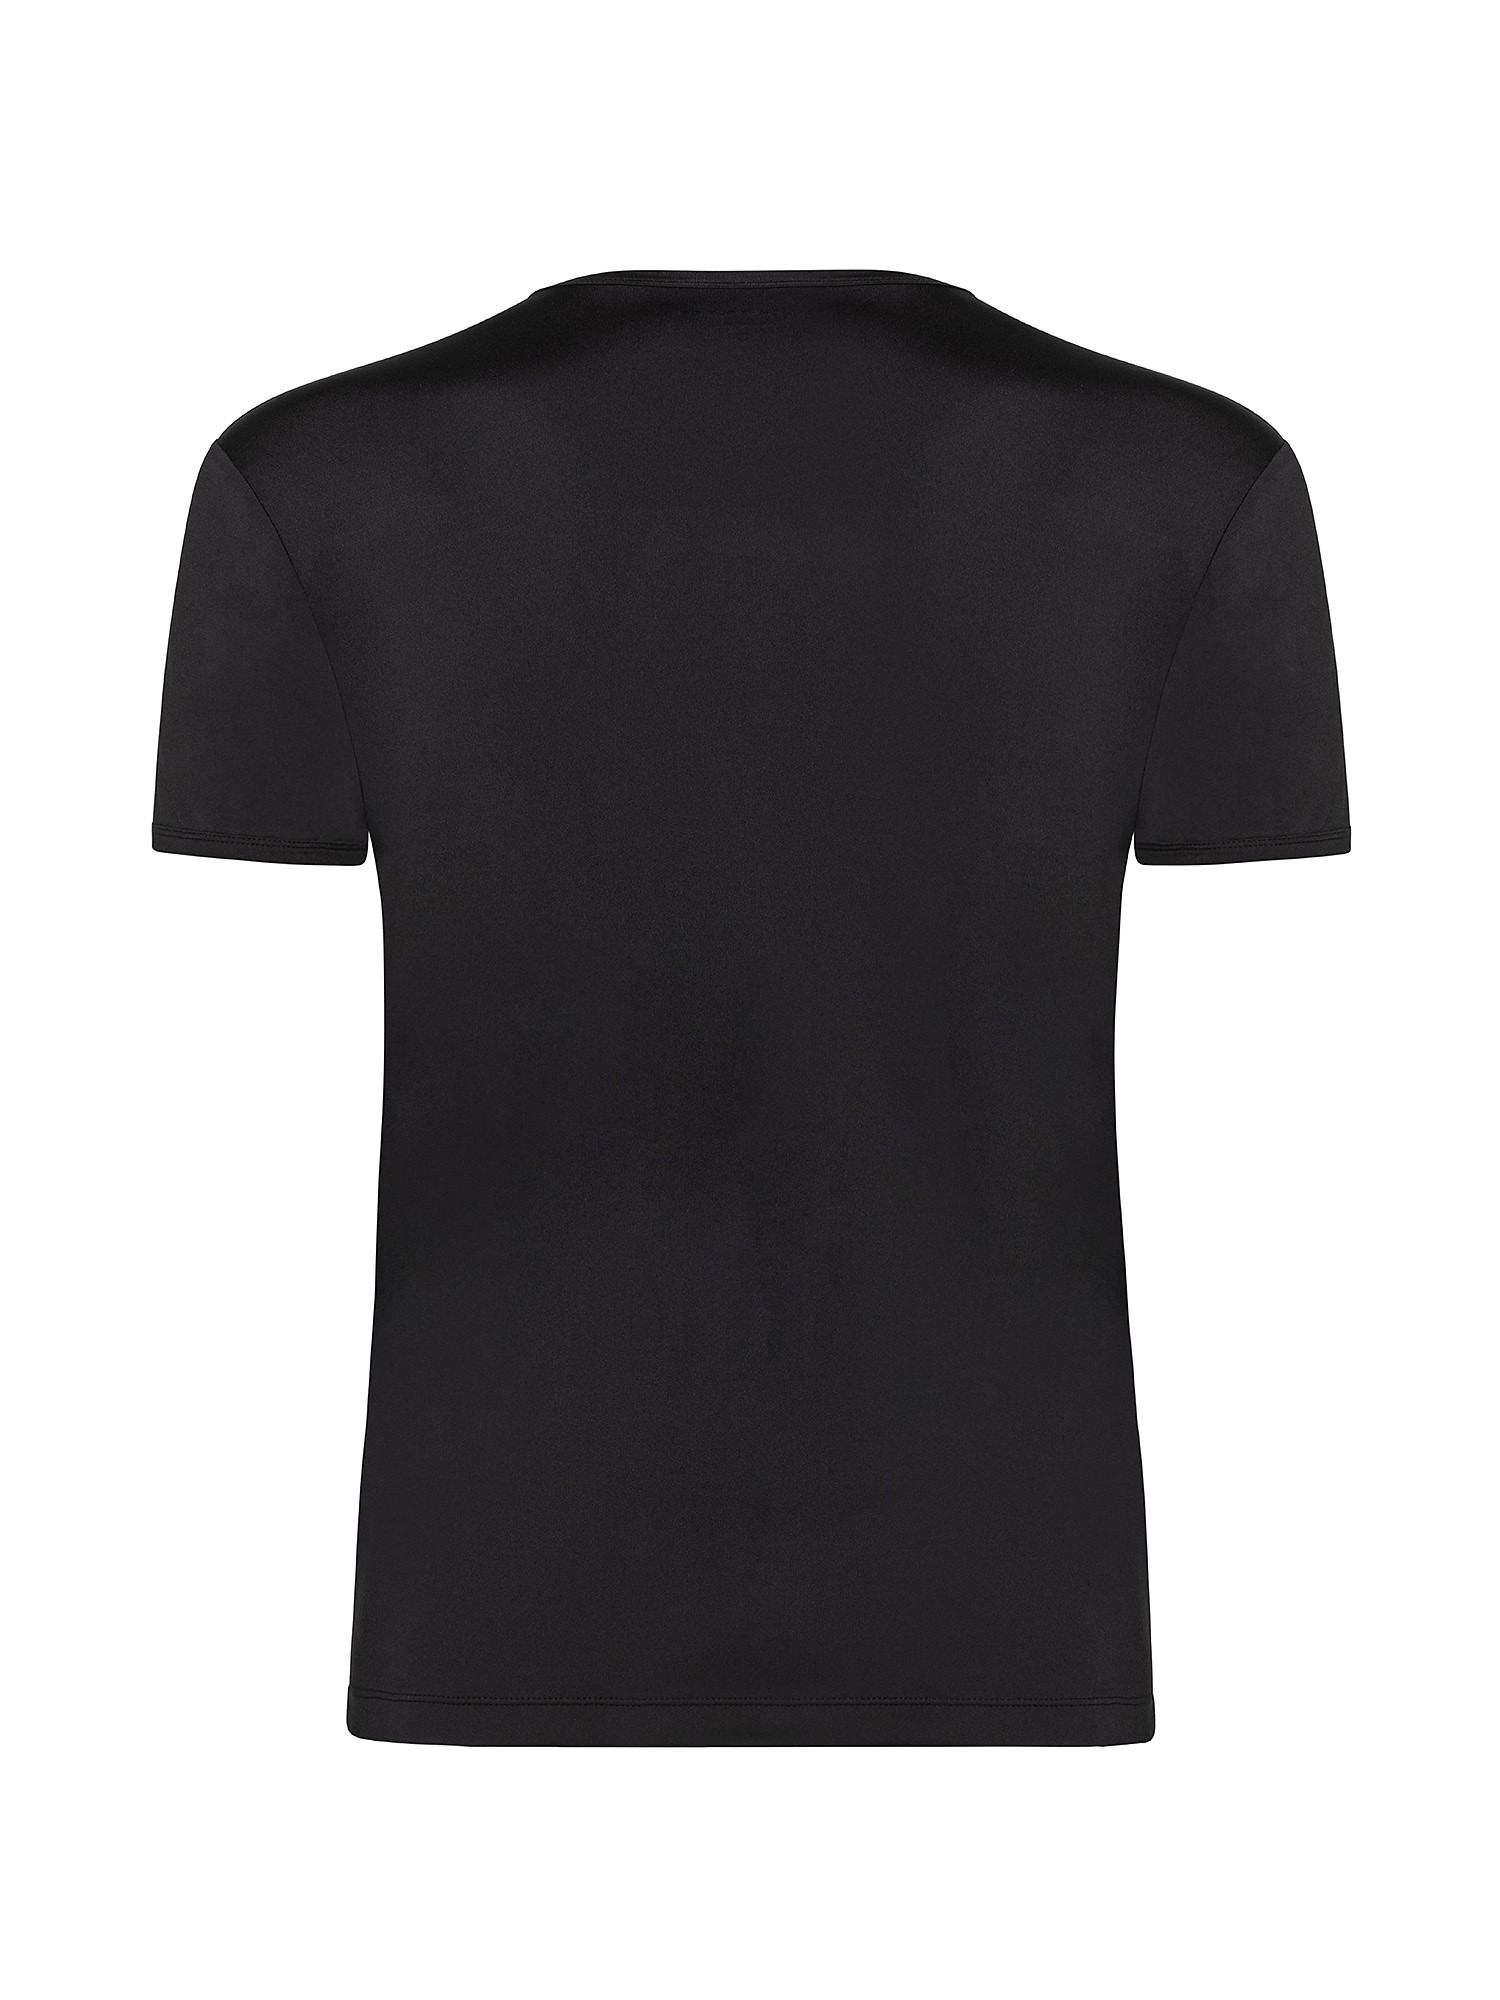 T-shirt girocollo microfibra tinta unita, Nero, large image number 1